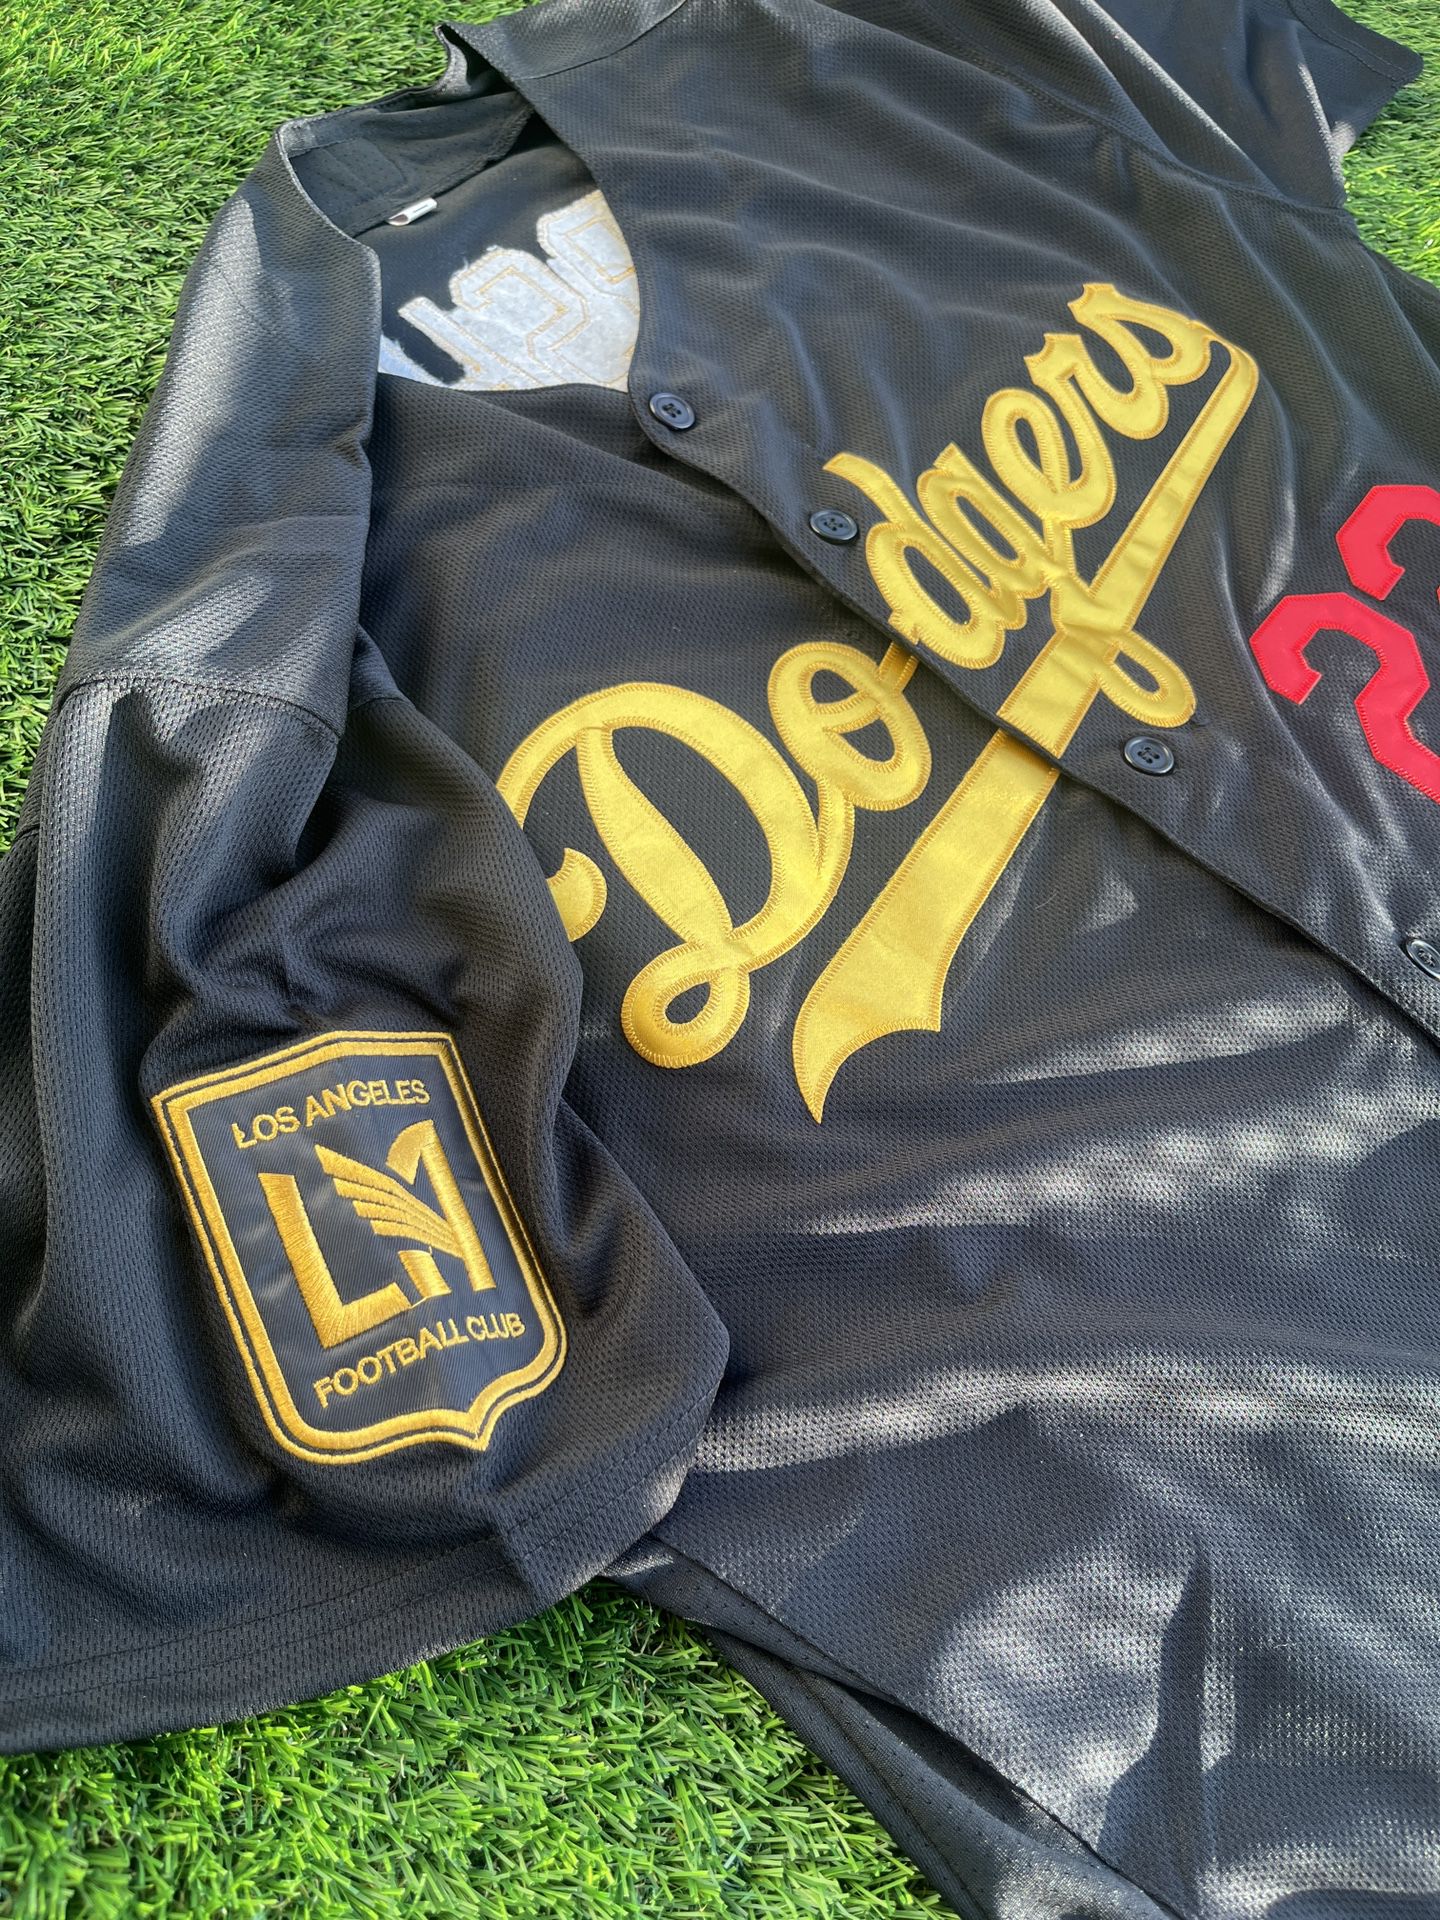 Dodgers Black Kershaw Jersey for Sale in Anaheim, CA - OfferUp